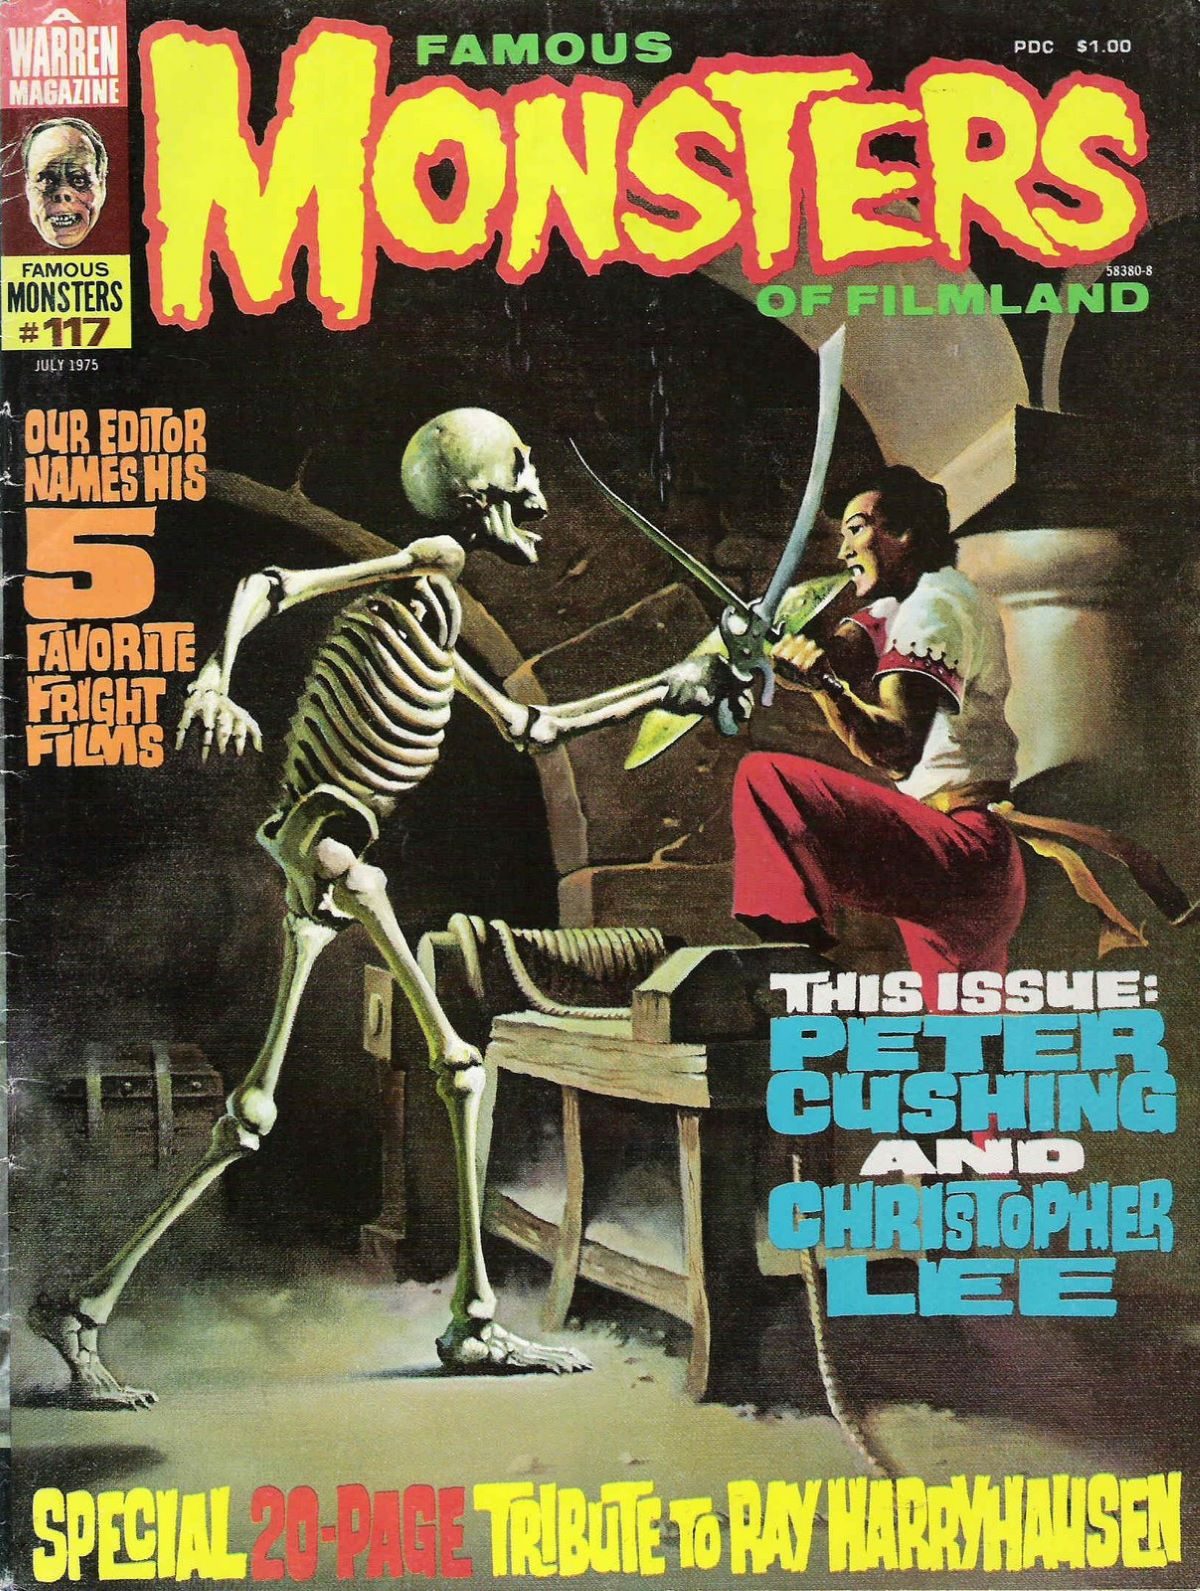 Famous Monsters of Filmland, magazine, horror films, Sinbad, 1970s